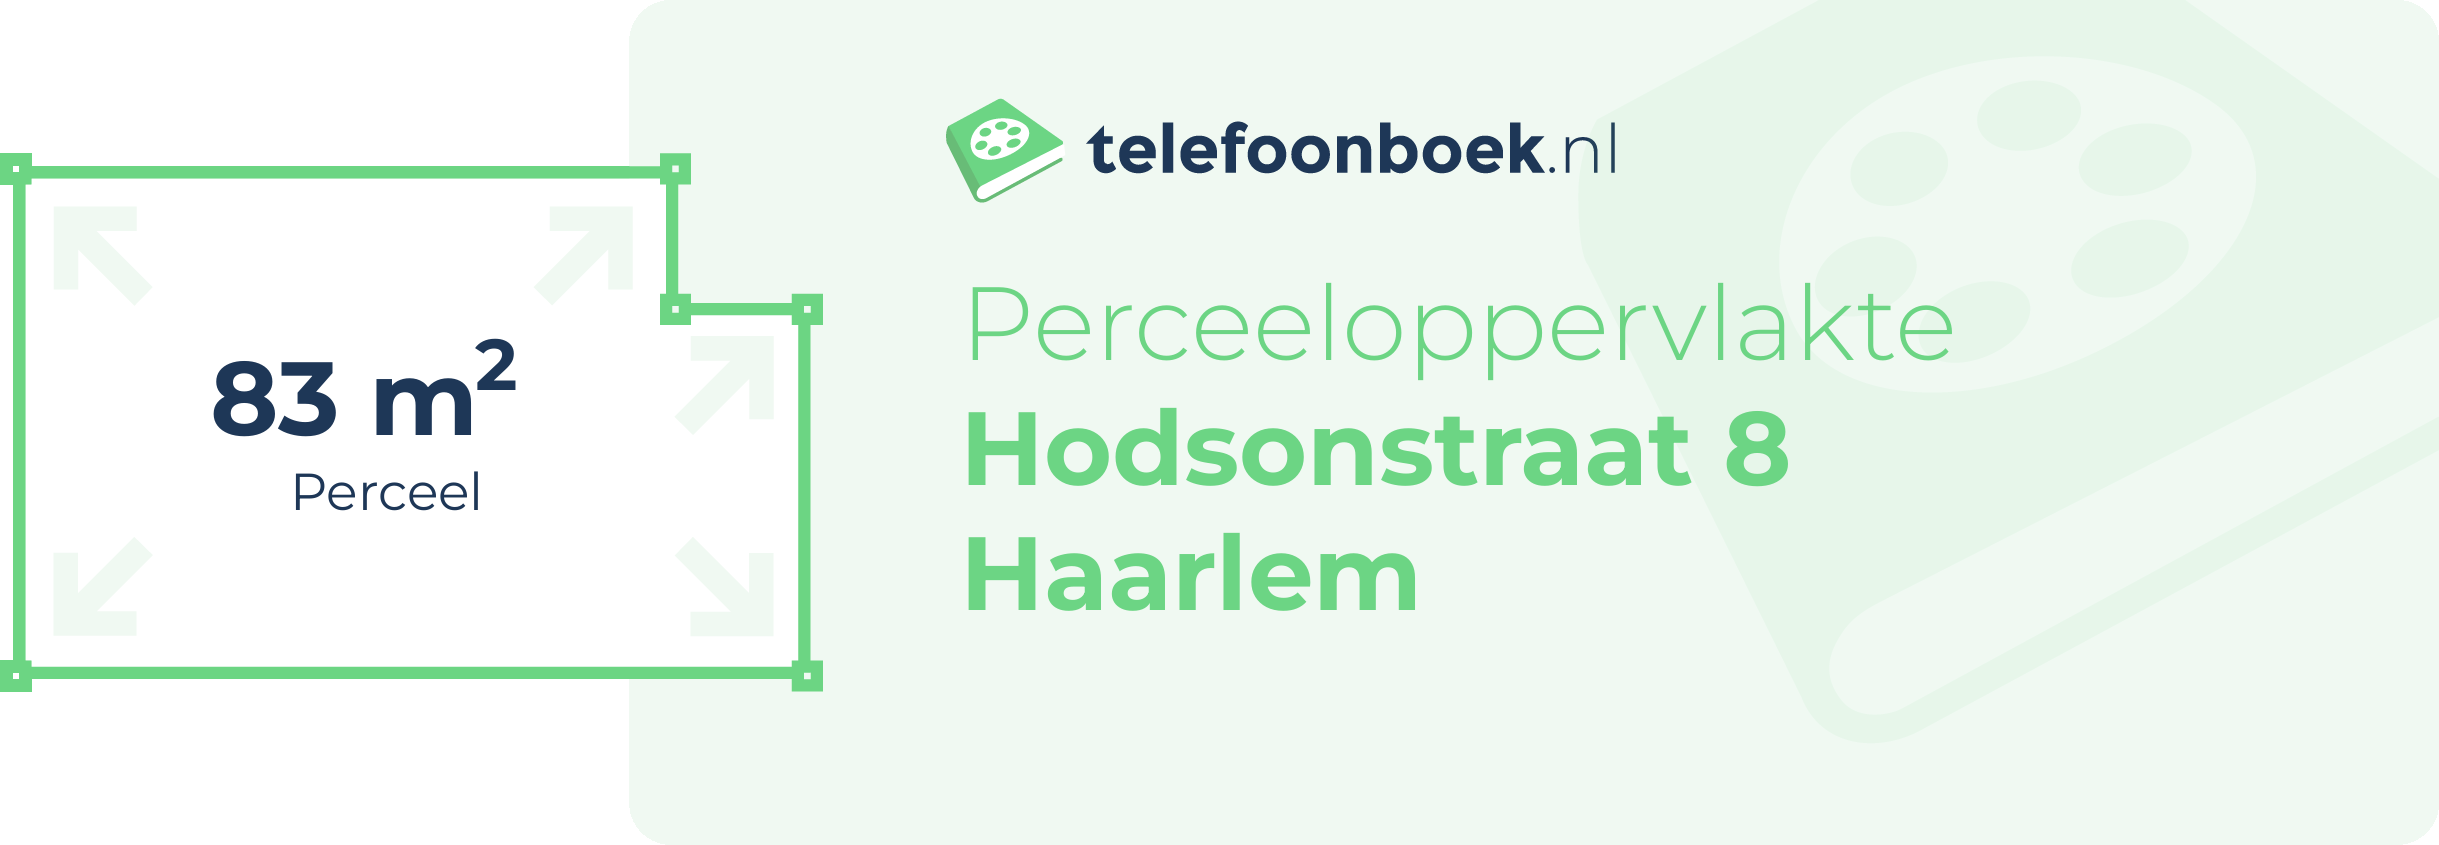 Perceeloppervlakte Hodsonstraat 8 Haarlem